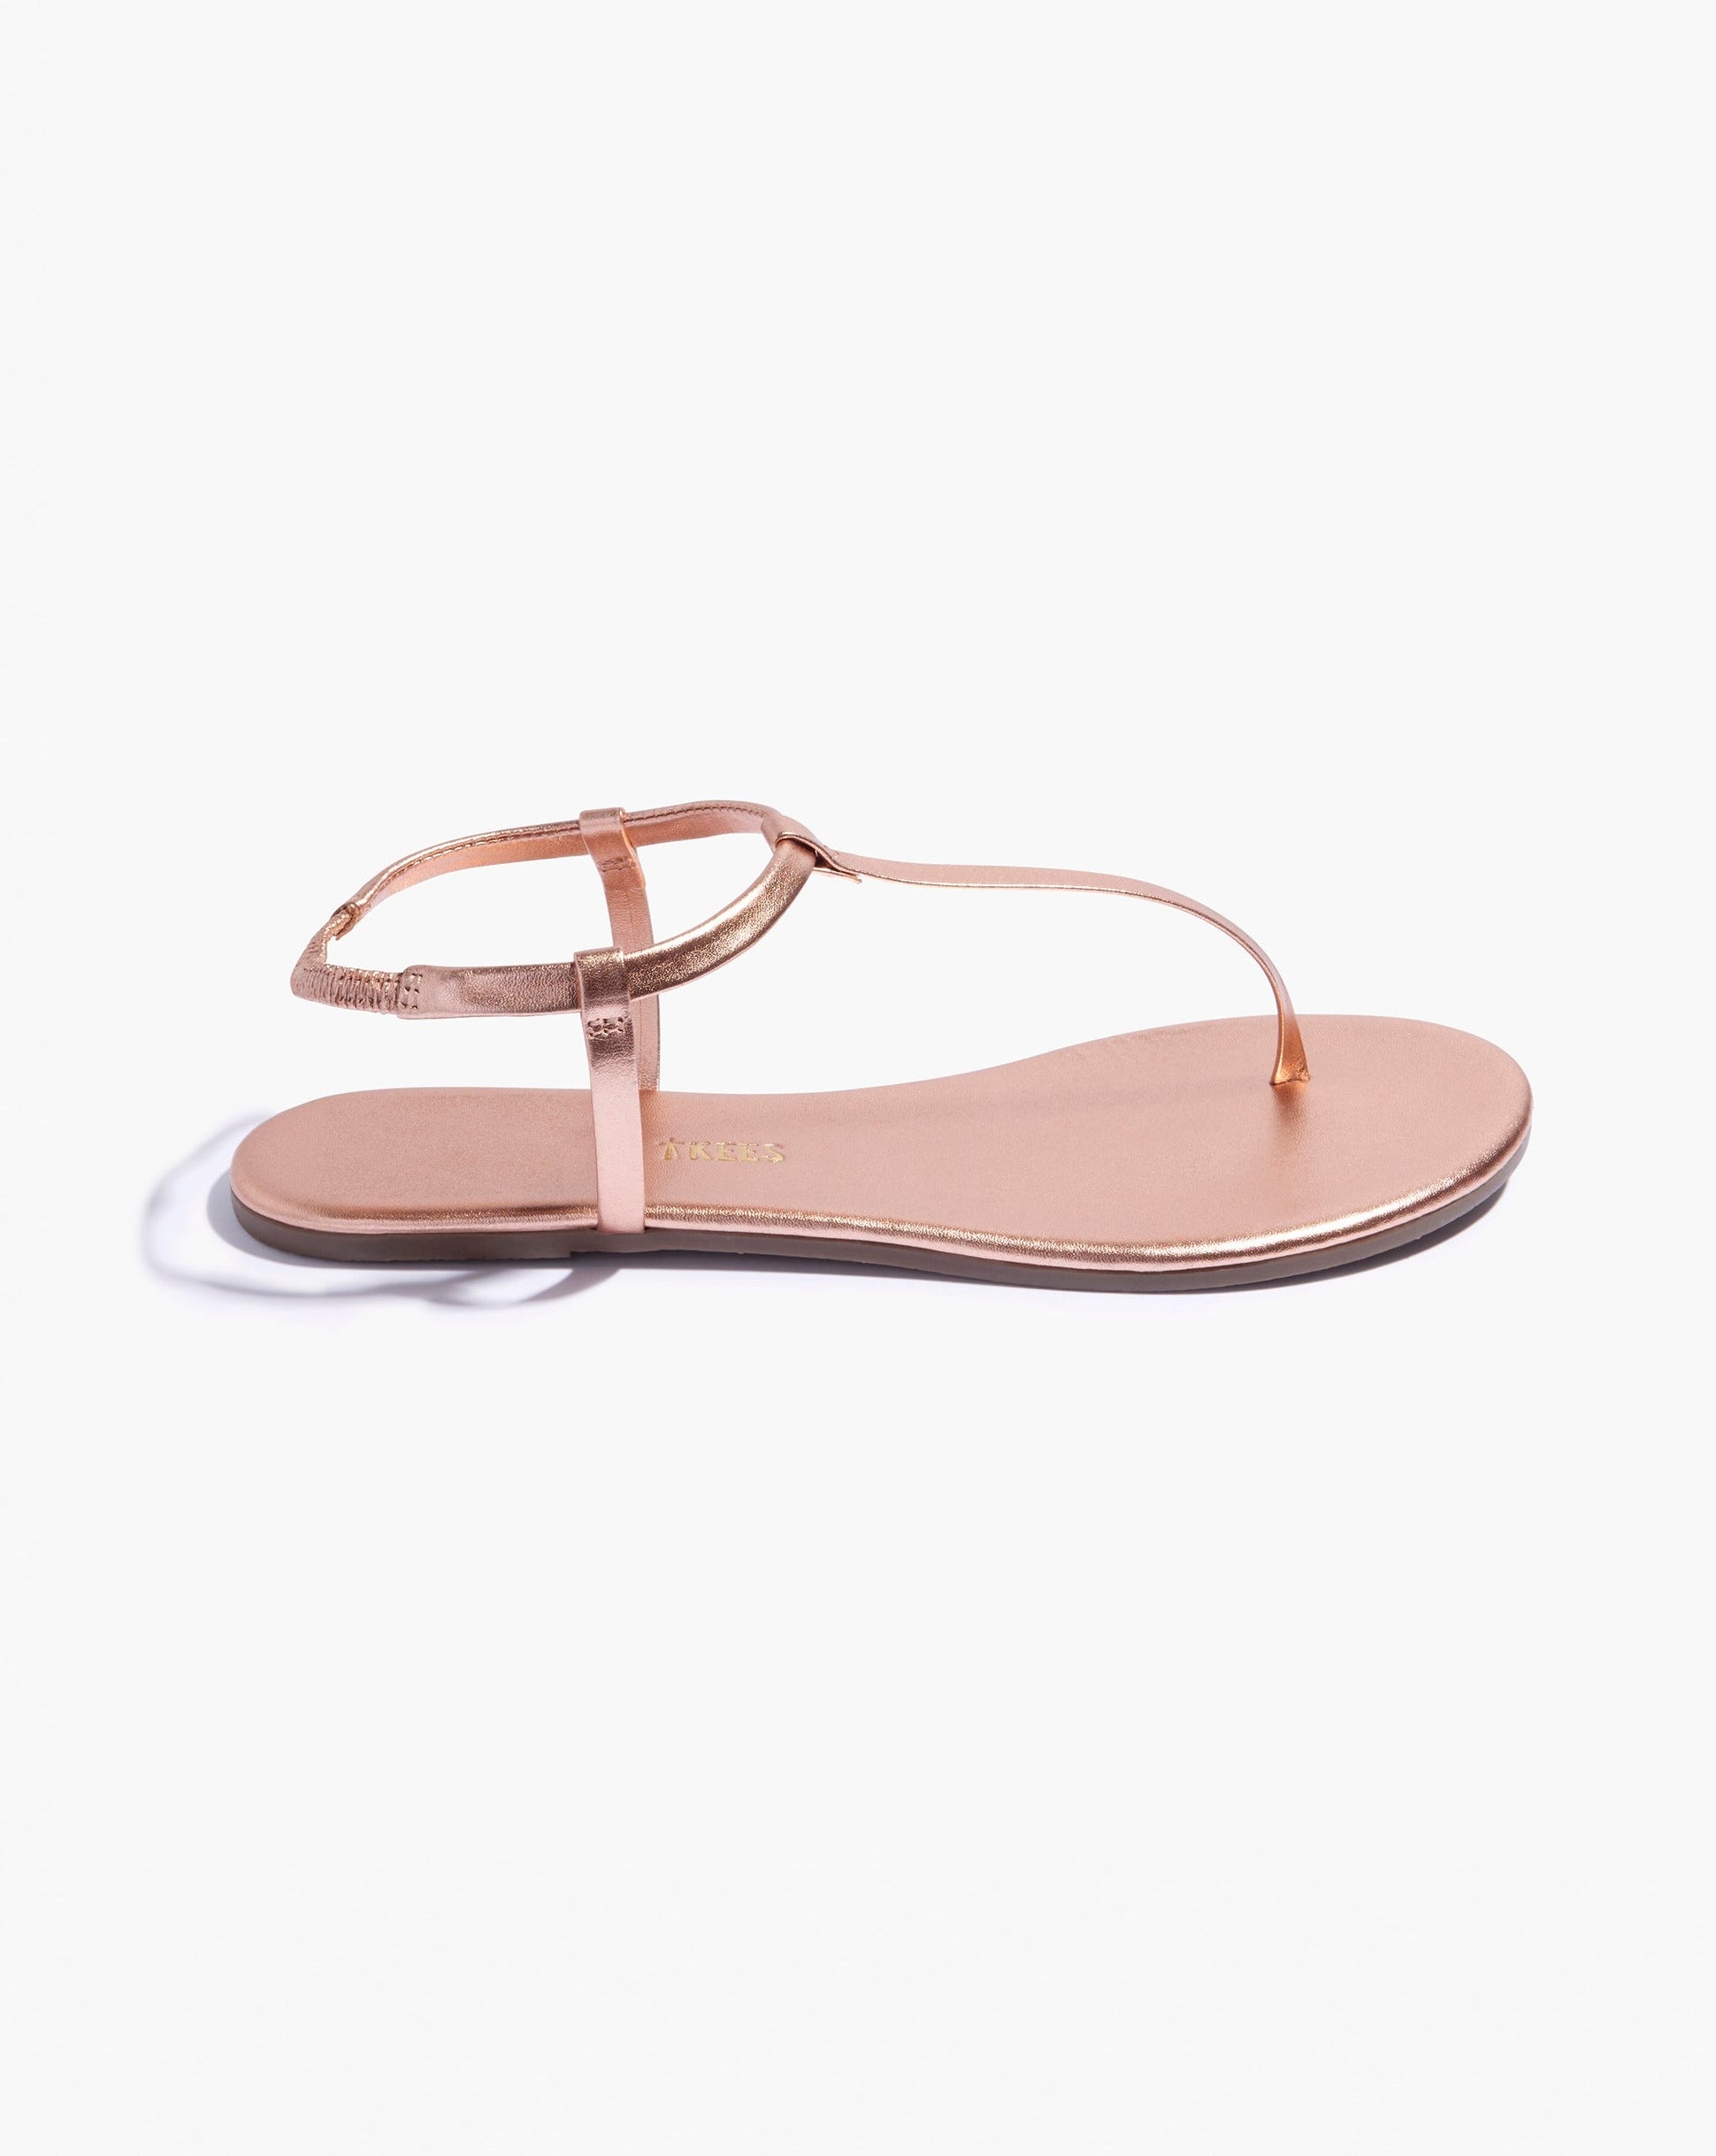 Mariana Metallics in Beach Pearl | Women's Sandals | TKEES – TKEES